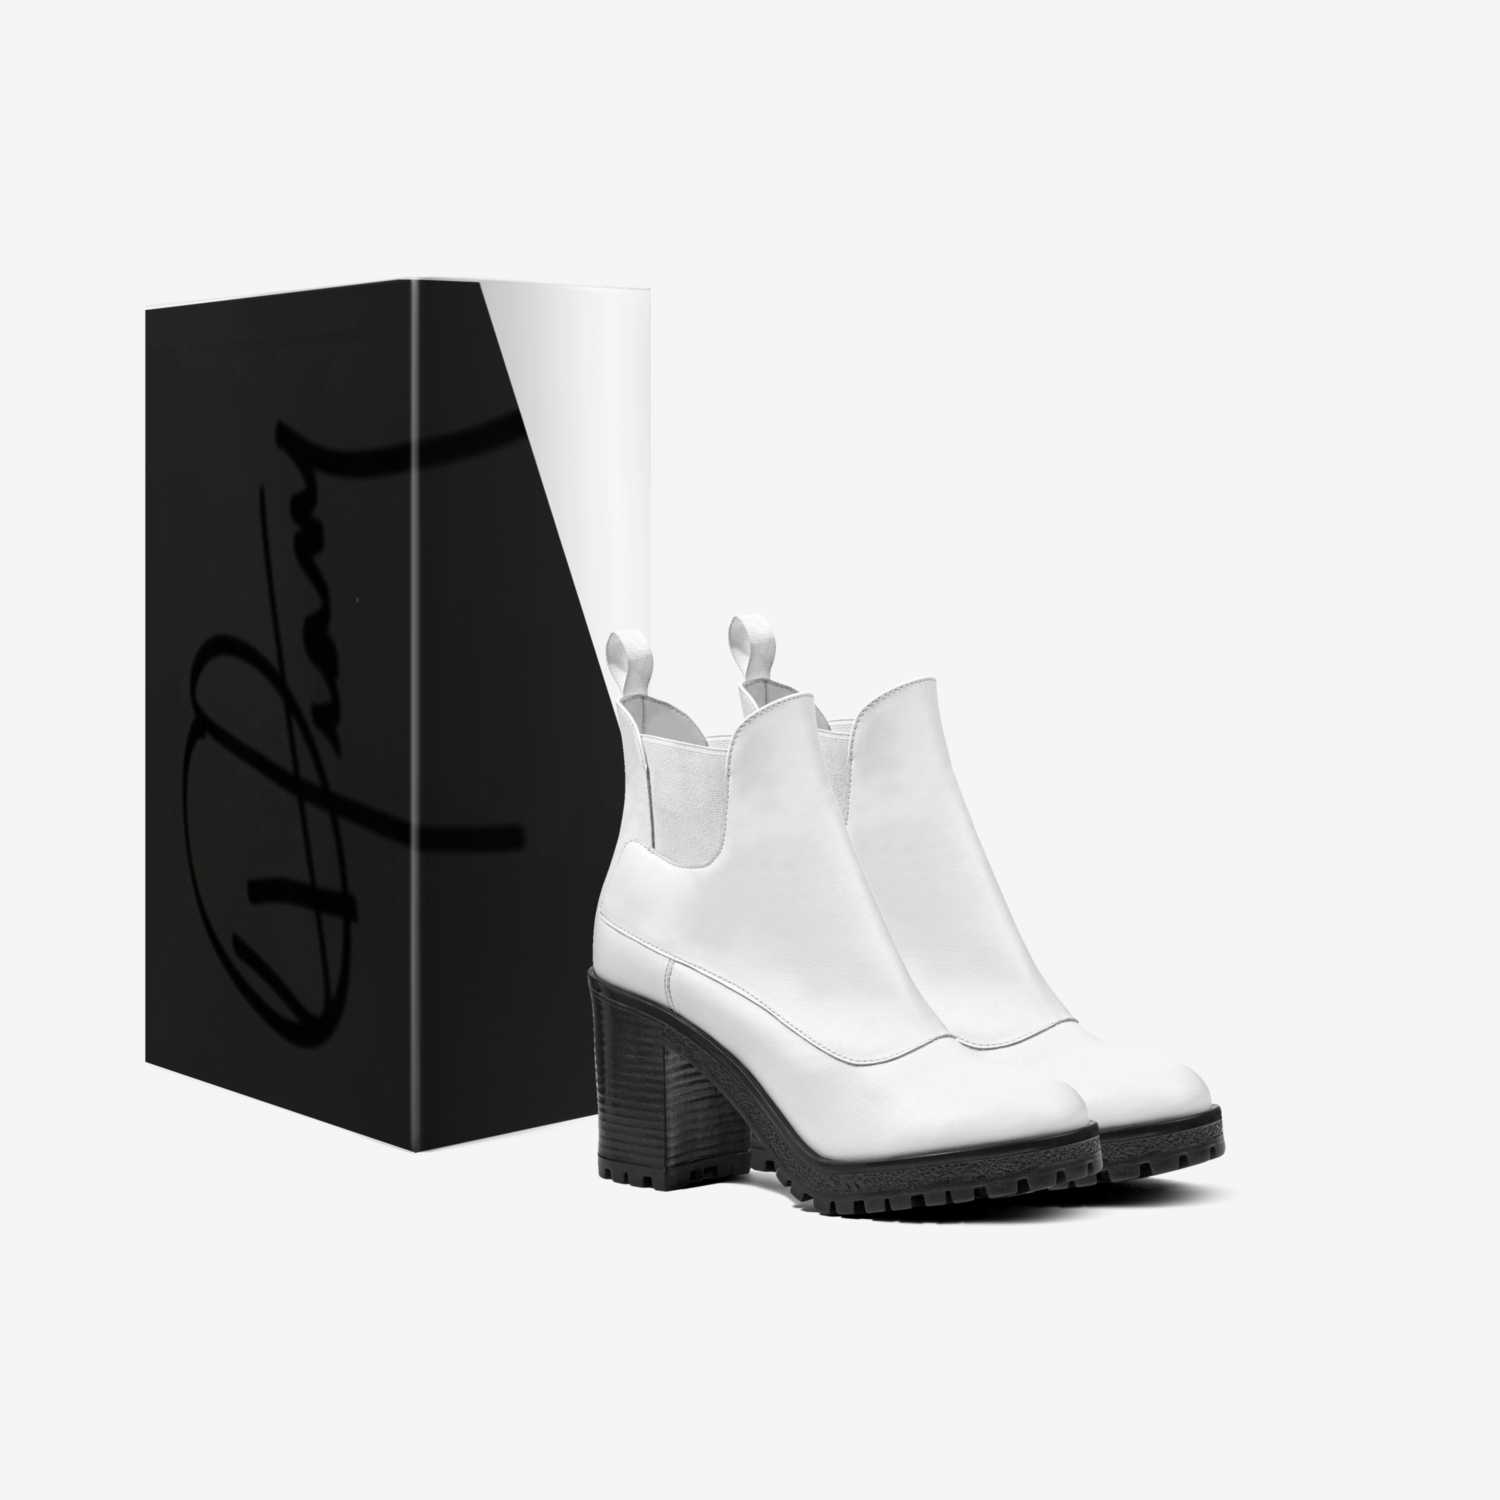 Aram TwentyNine custom made in Italy shoes by Ronnie Aram | Box view